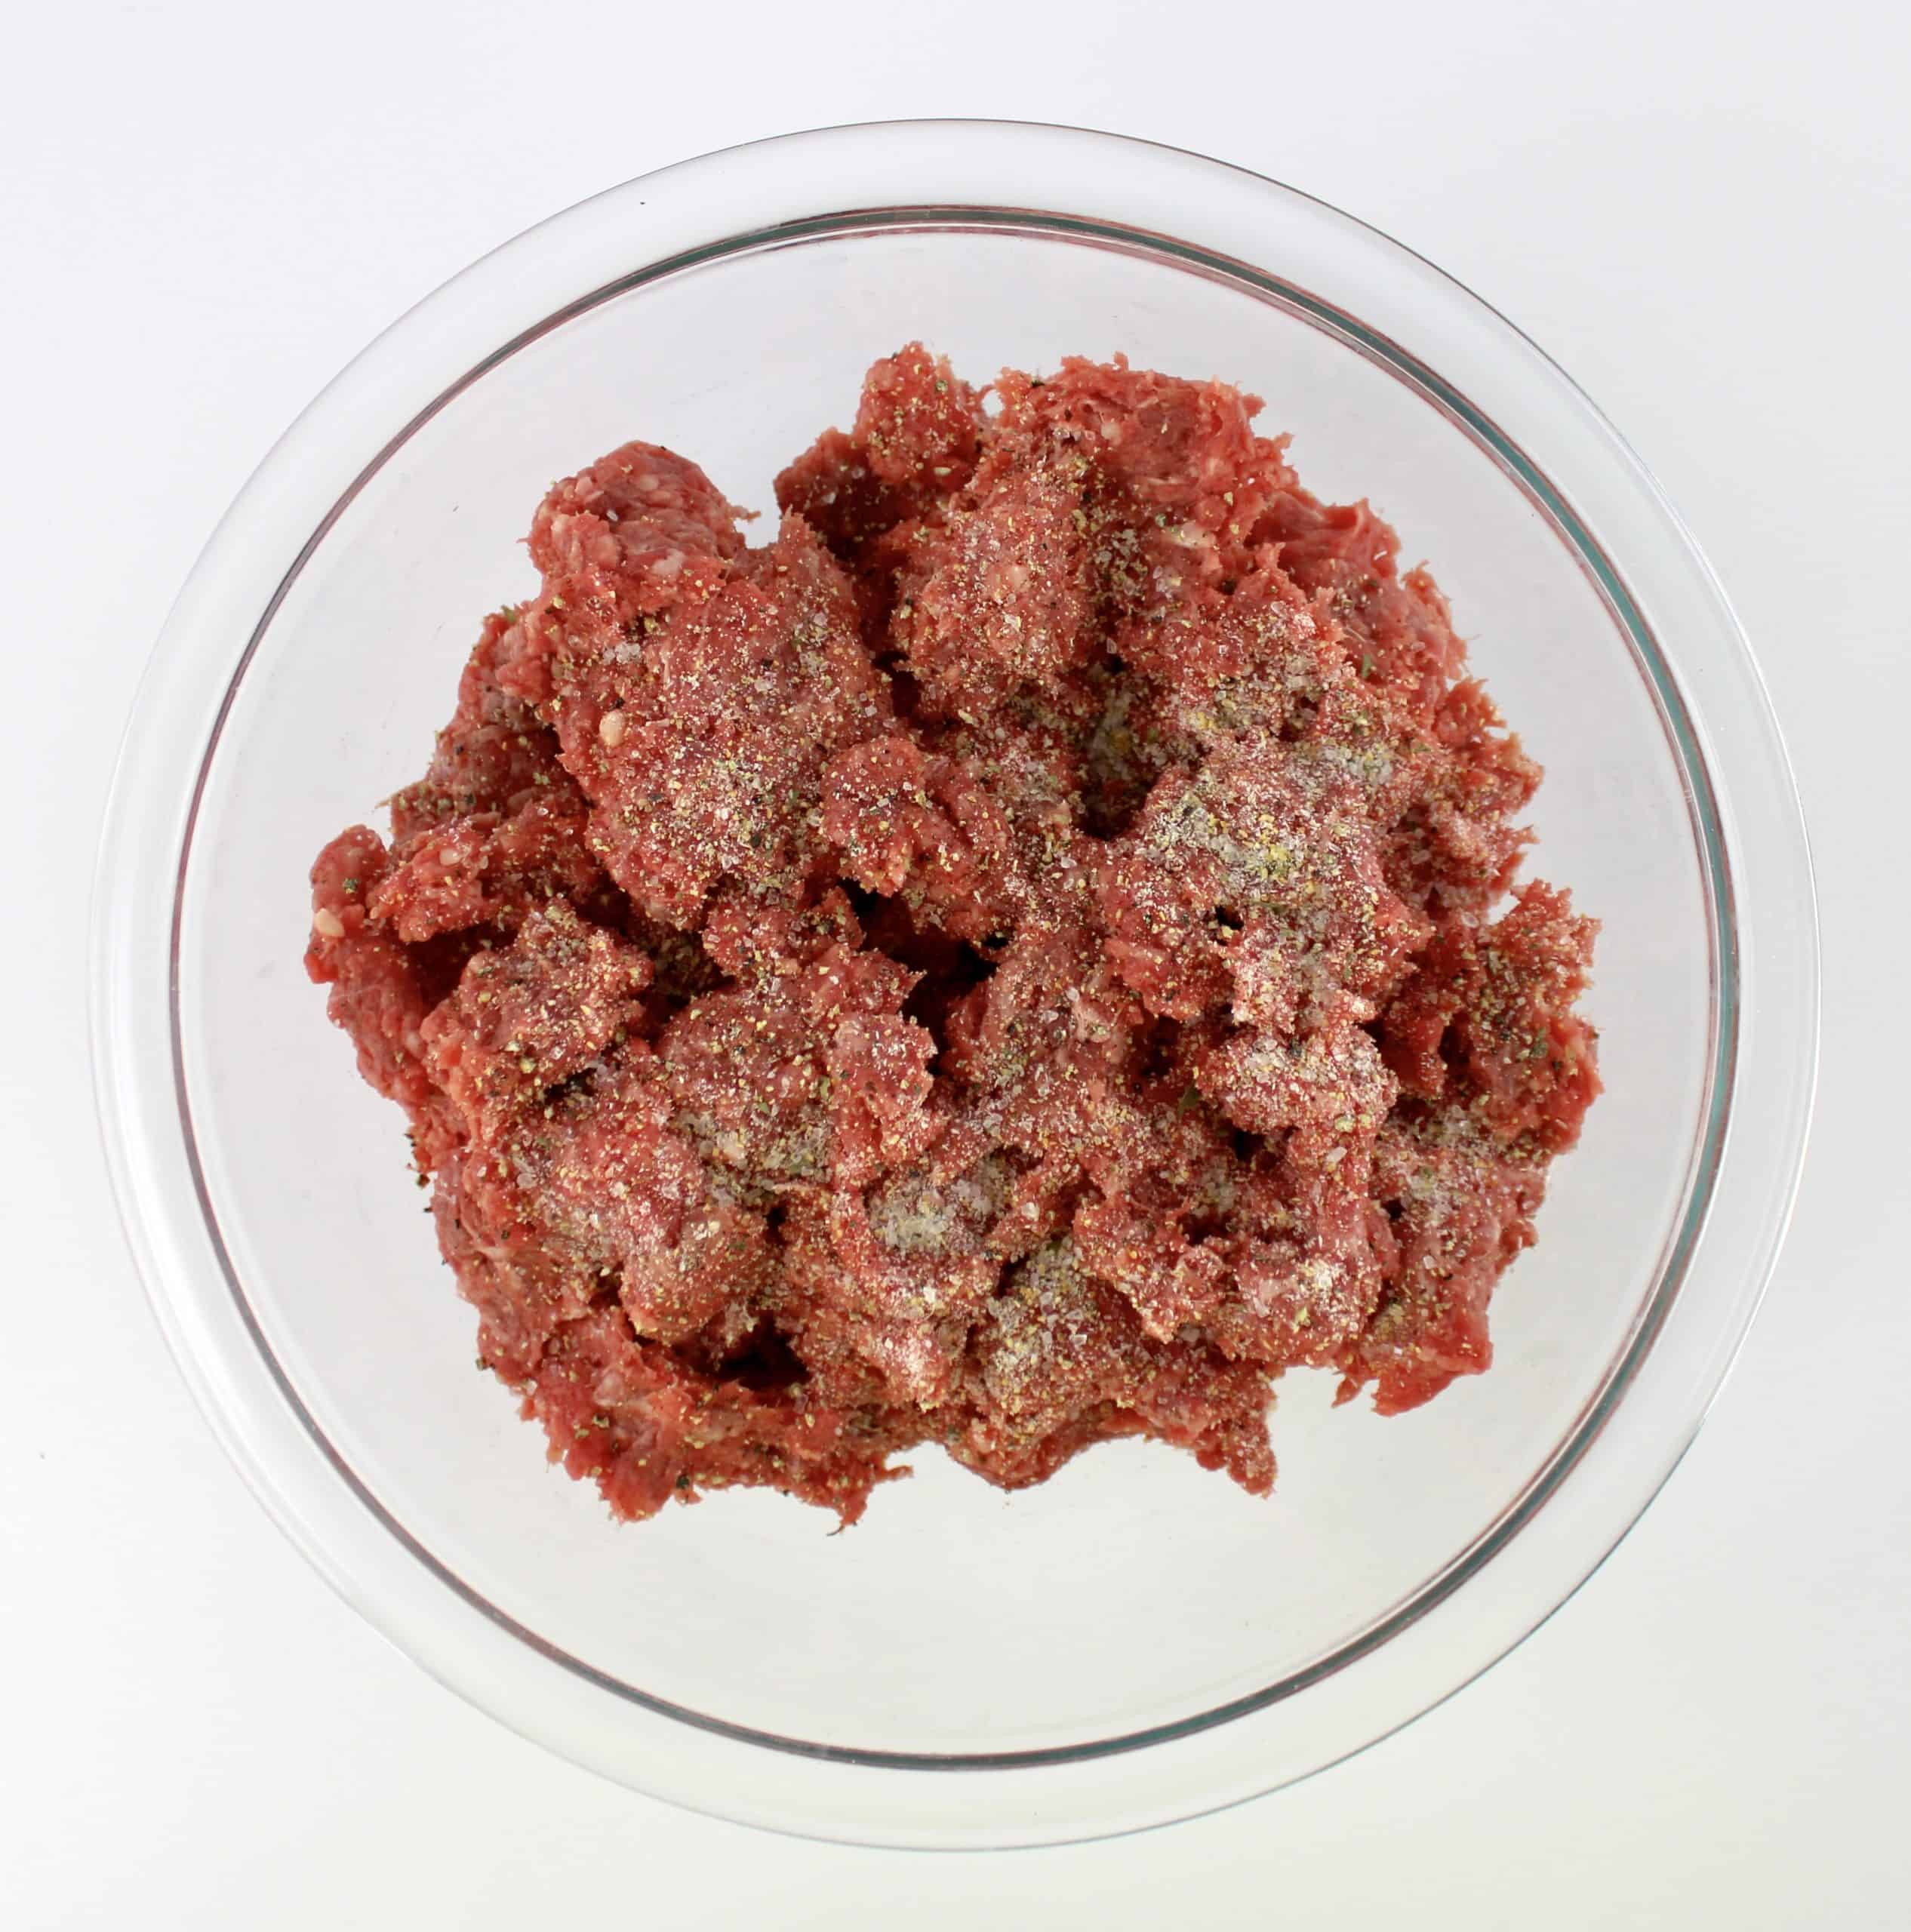 sesasoned ground beef in glass bowl